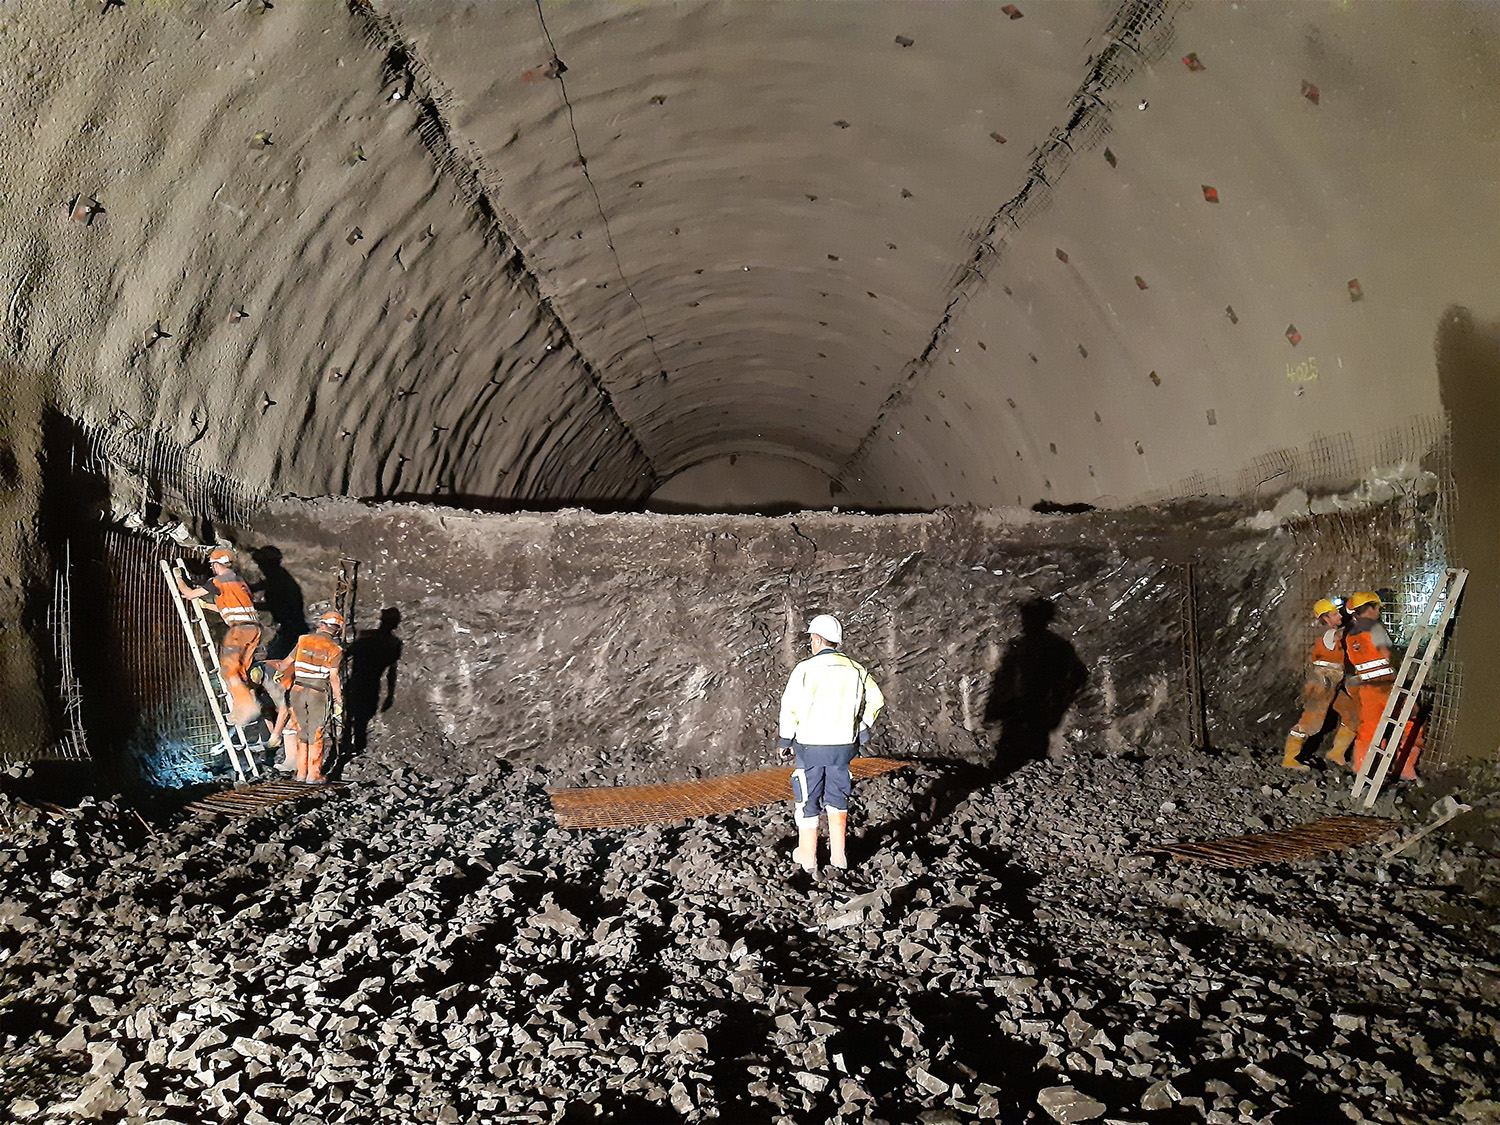 Karawankentunnel, Rosenthal - Izgradnja tunela